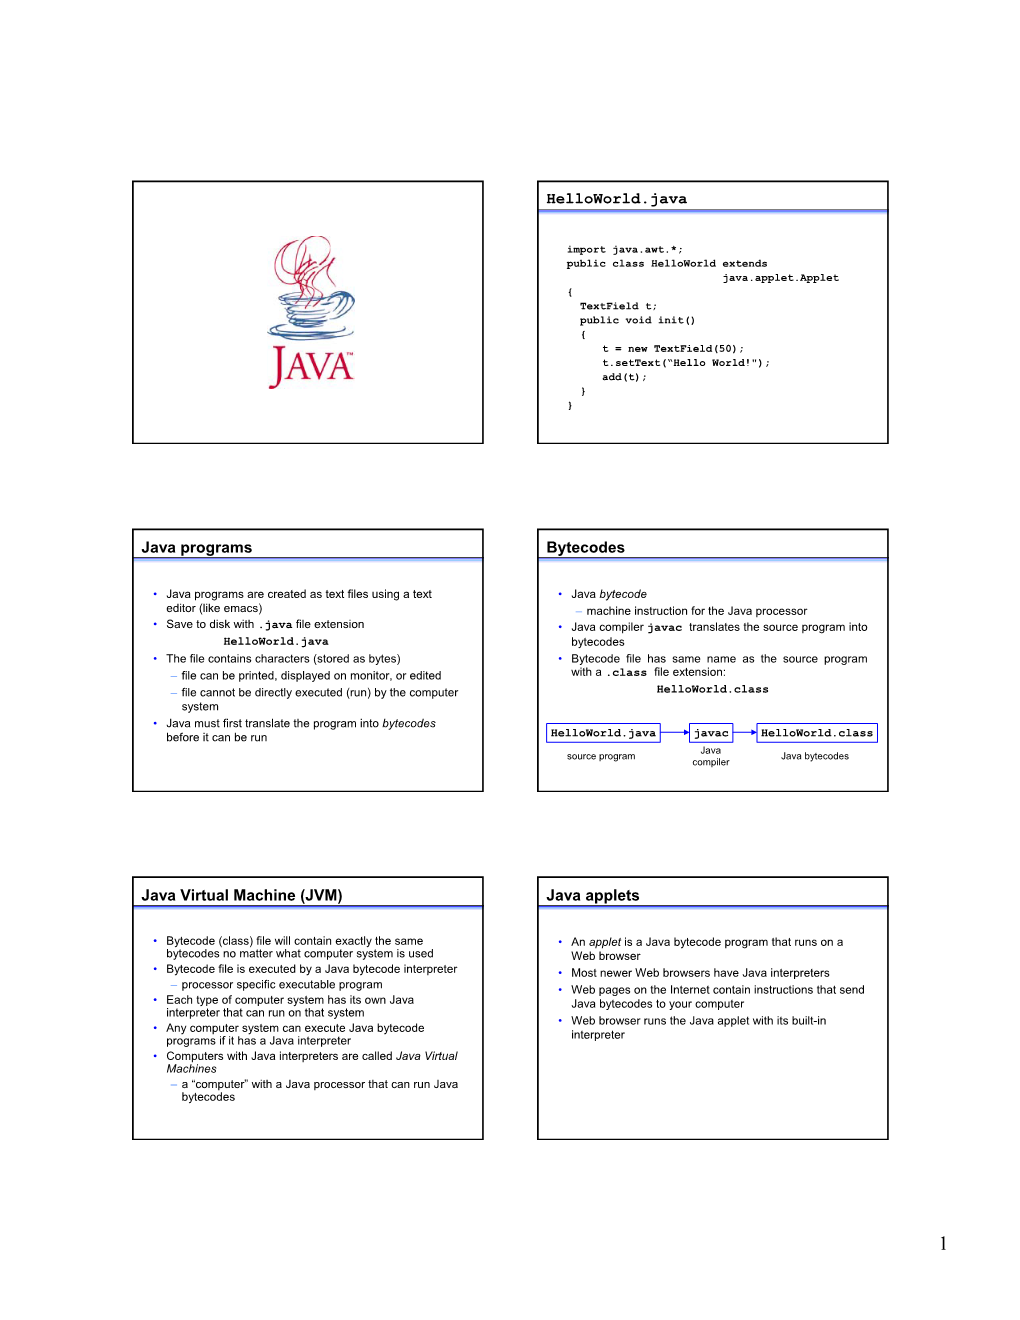 Helloworld.Java Java Programs Bytecodes Java Virtual Machine (JVM)